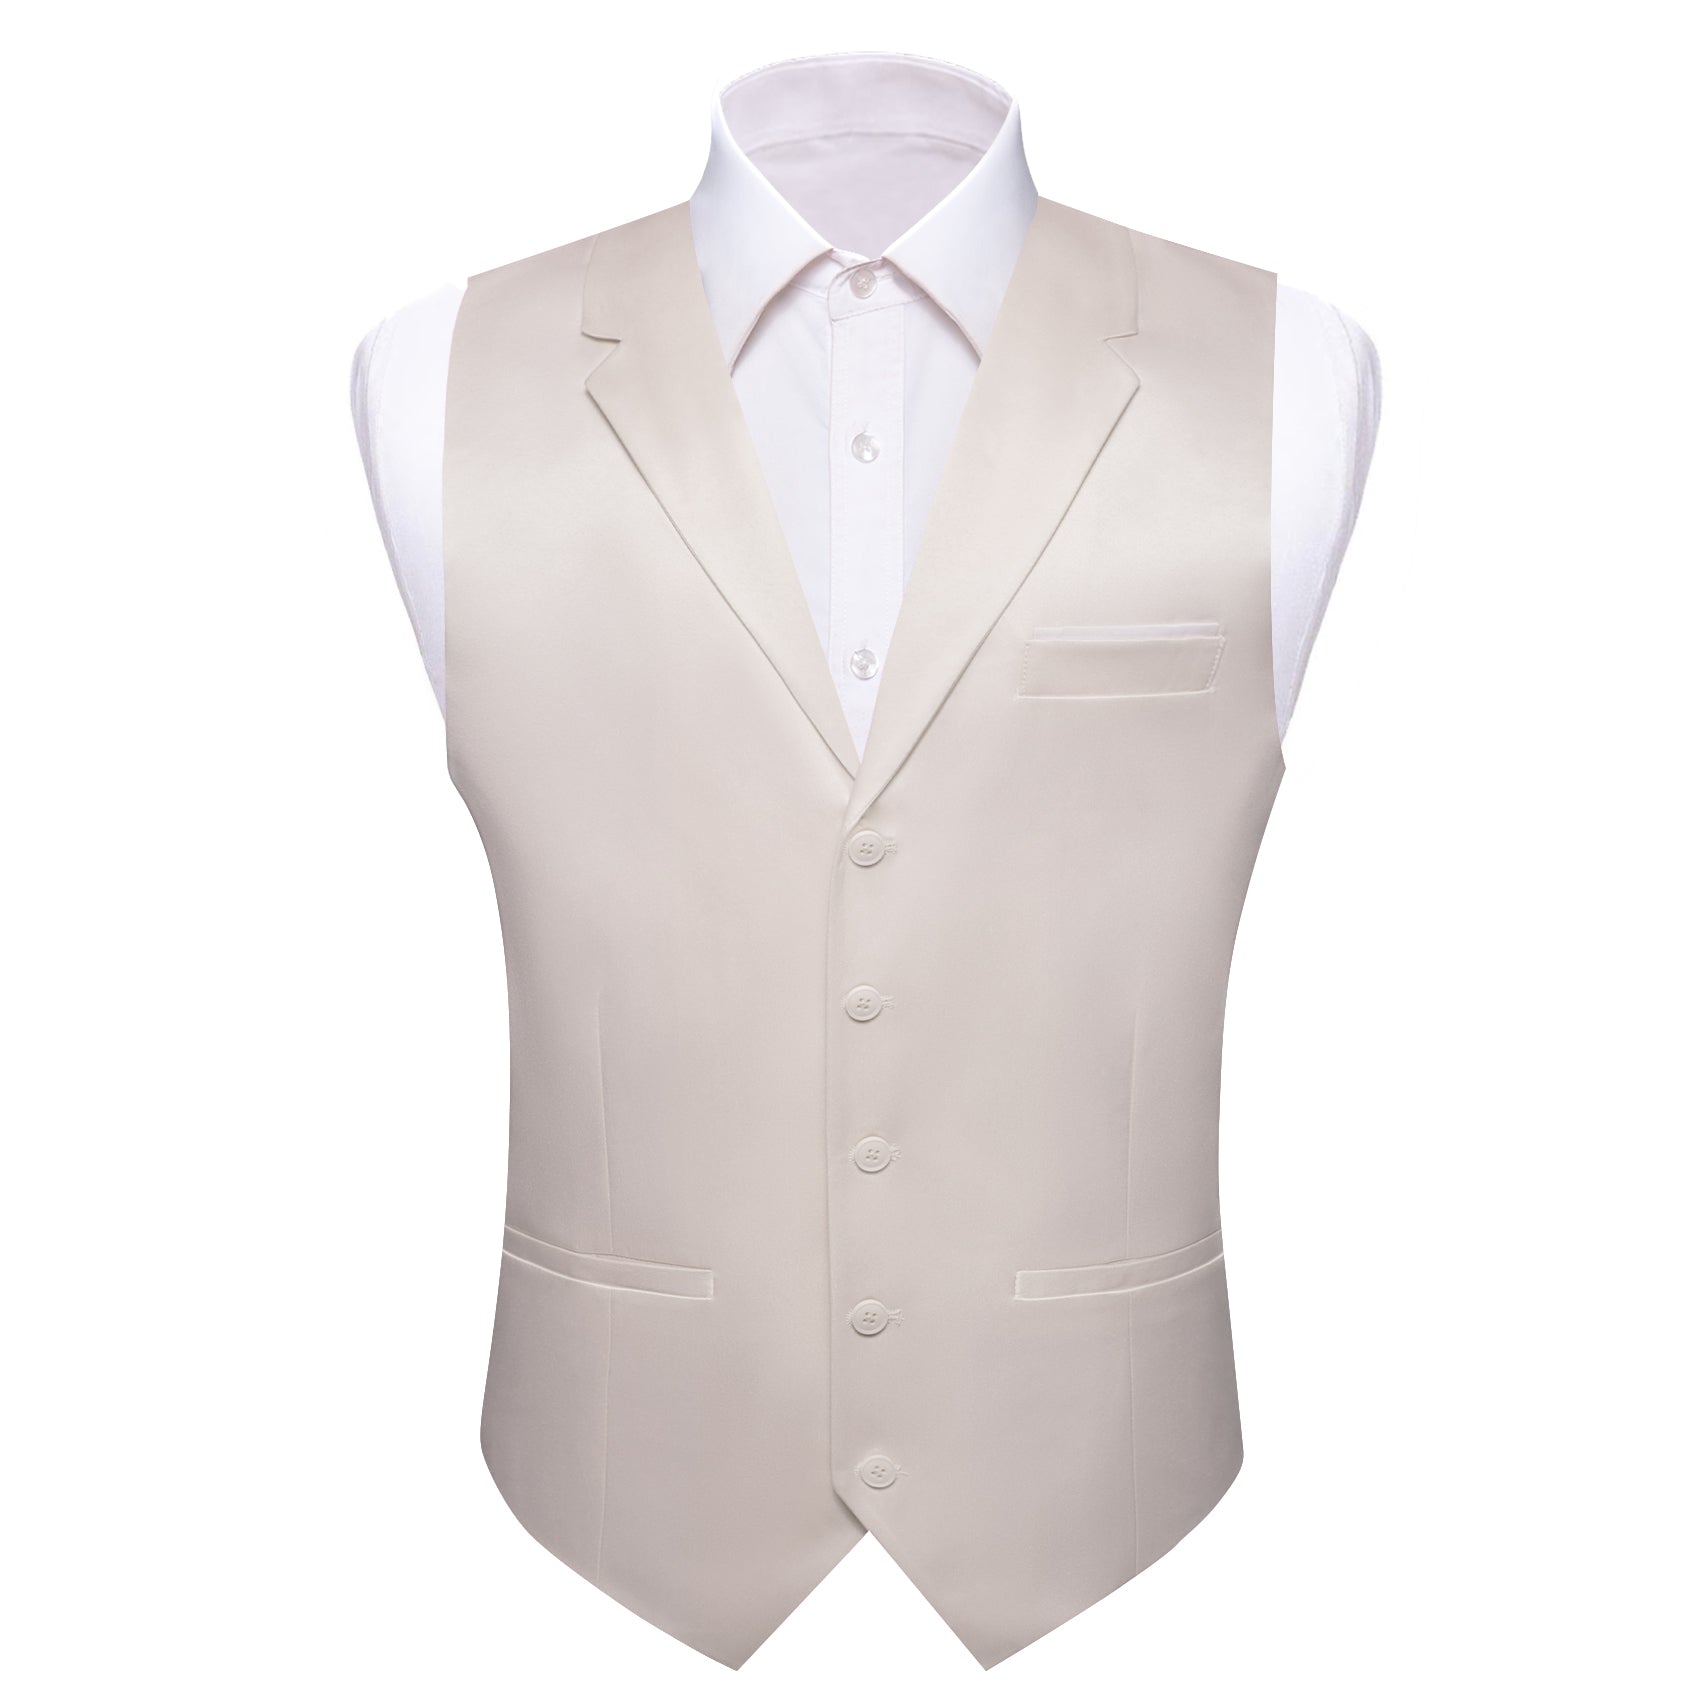 Barry.wang Ivory Solid Vest Waistcoat Set